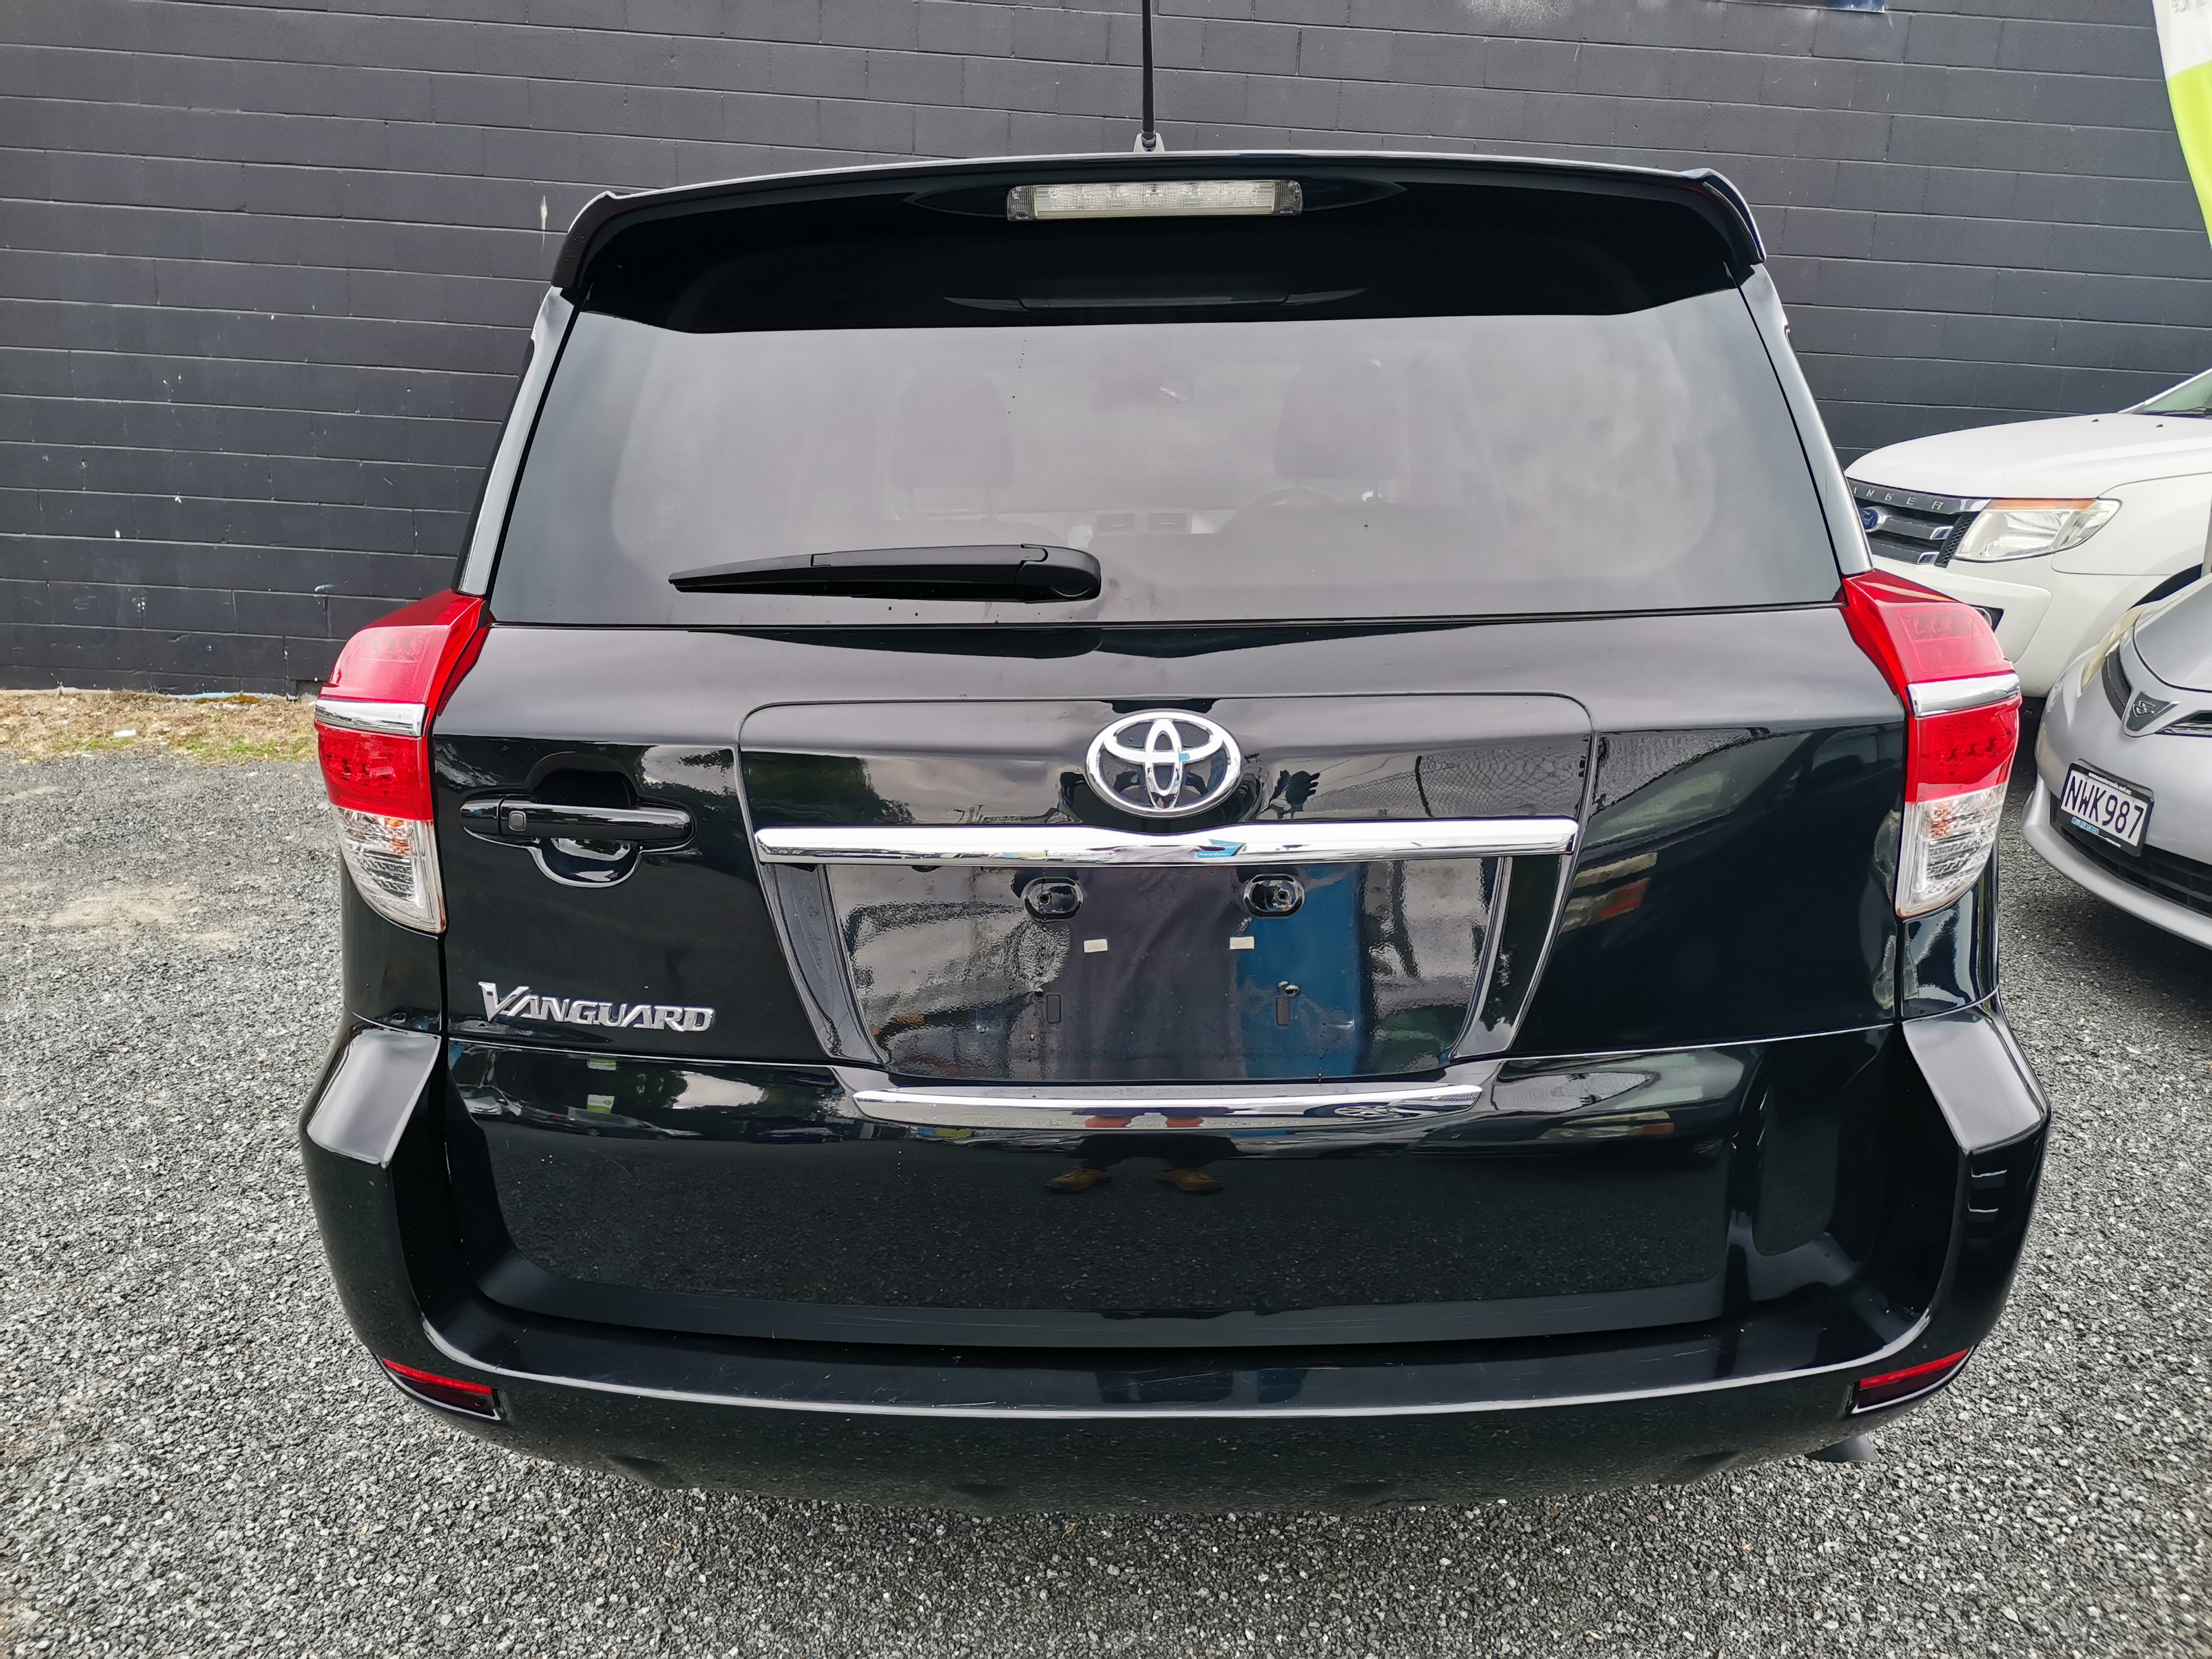 Toyota Vanguard 2012 Image 4